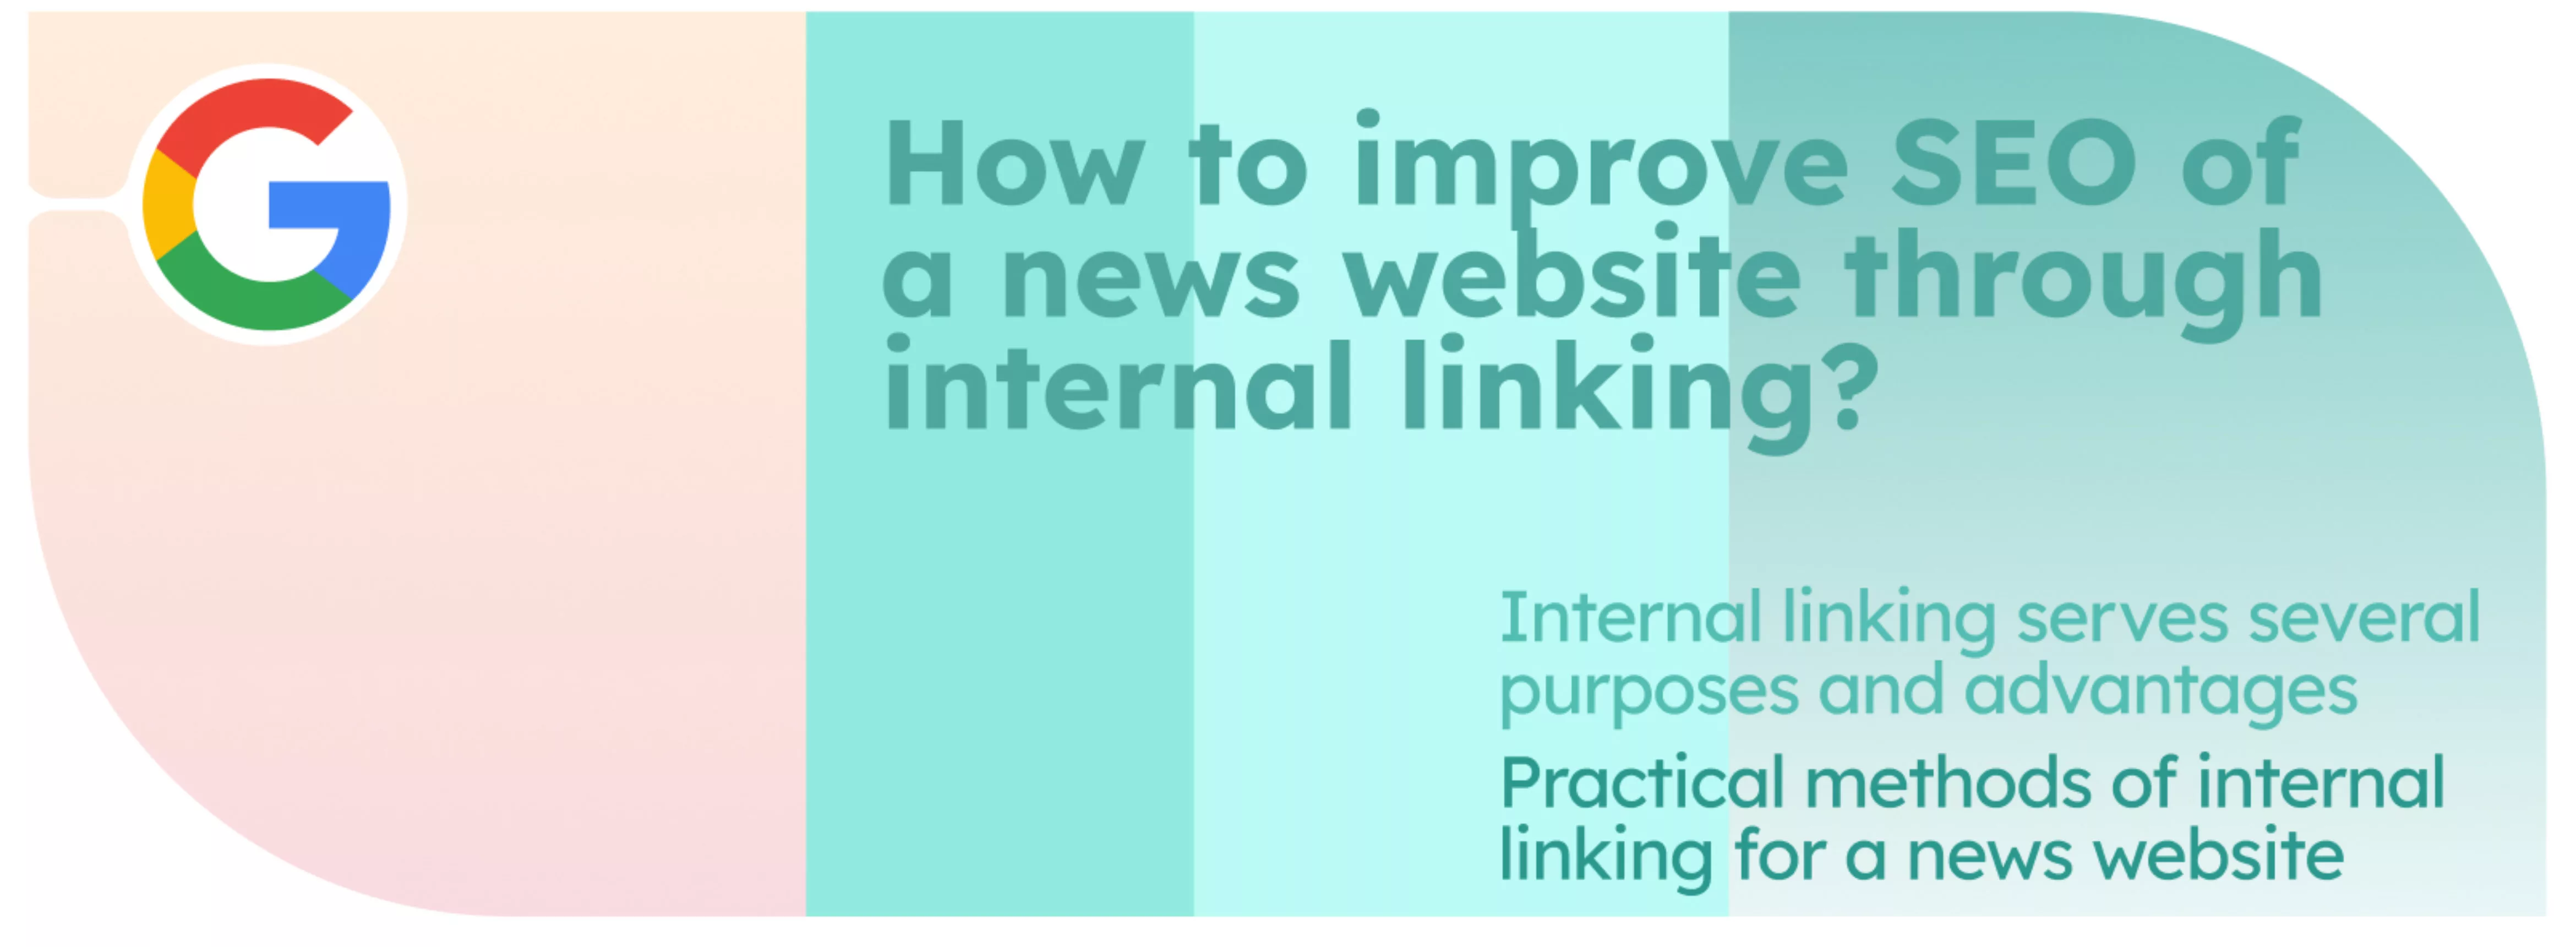 How to improve SEO of a news website through internal linking?